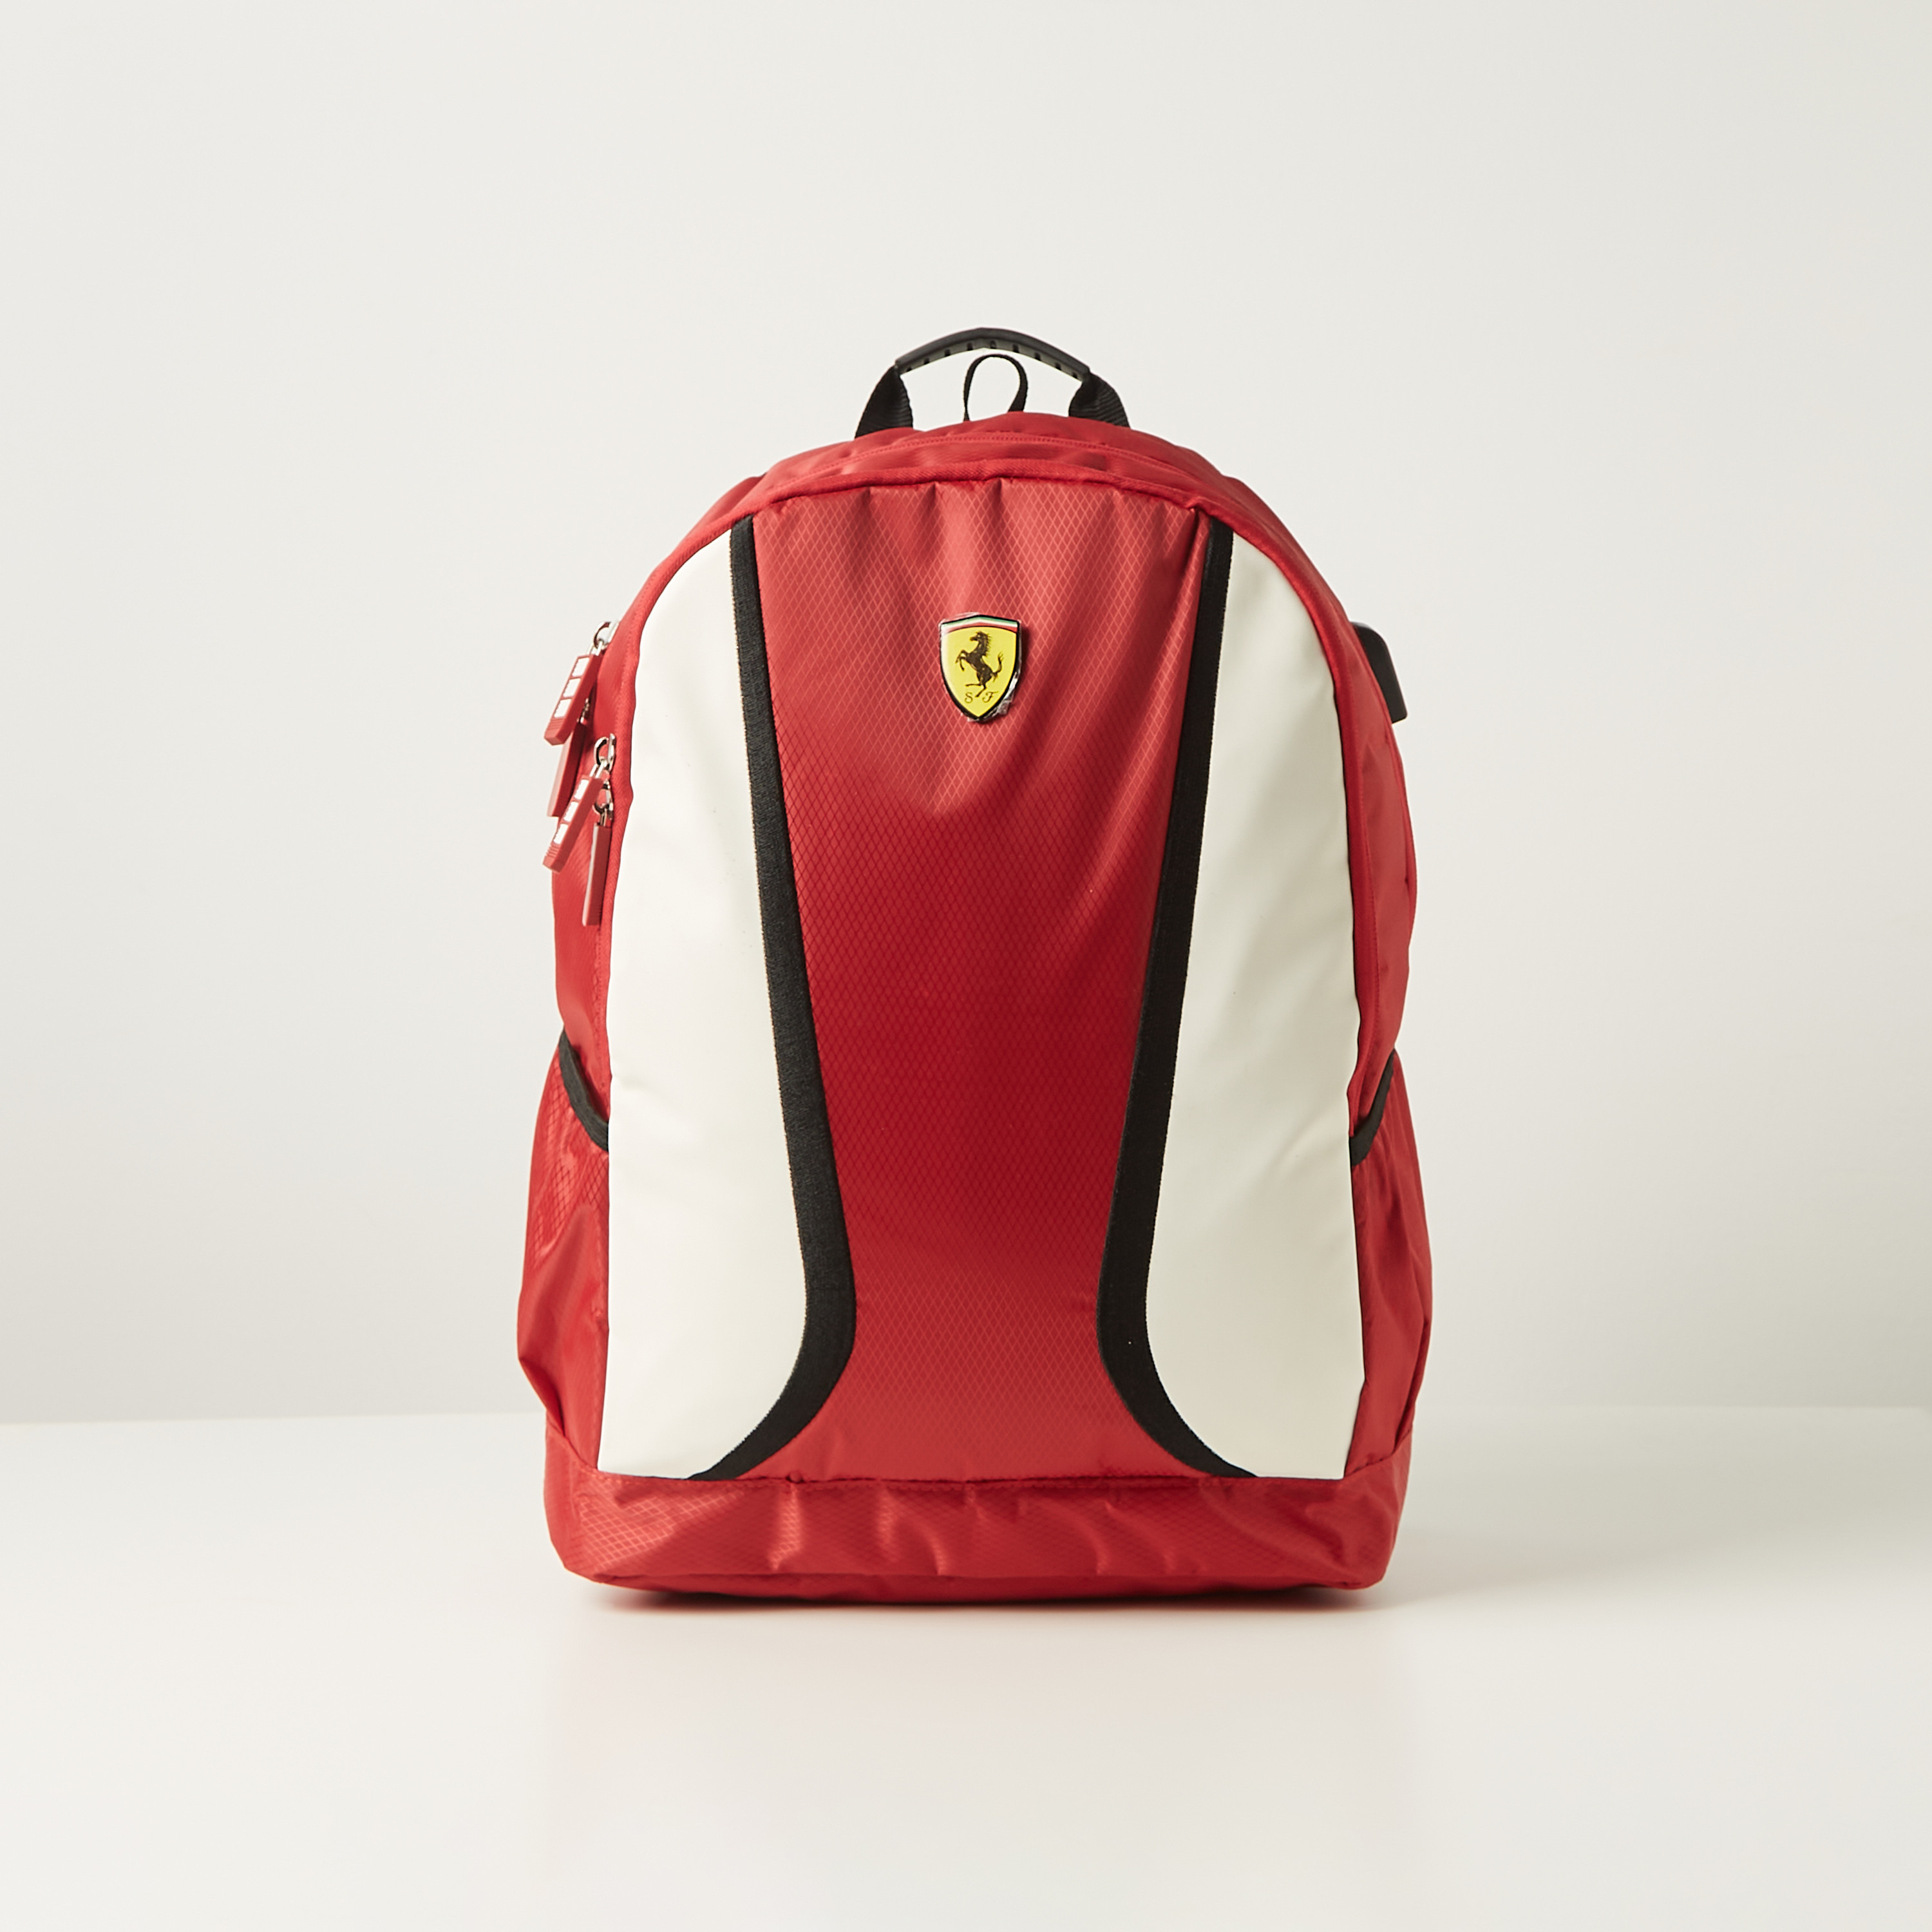 Puma Ferrari LS Handbag | eBay